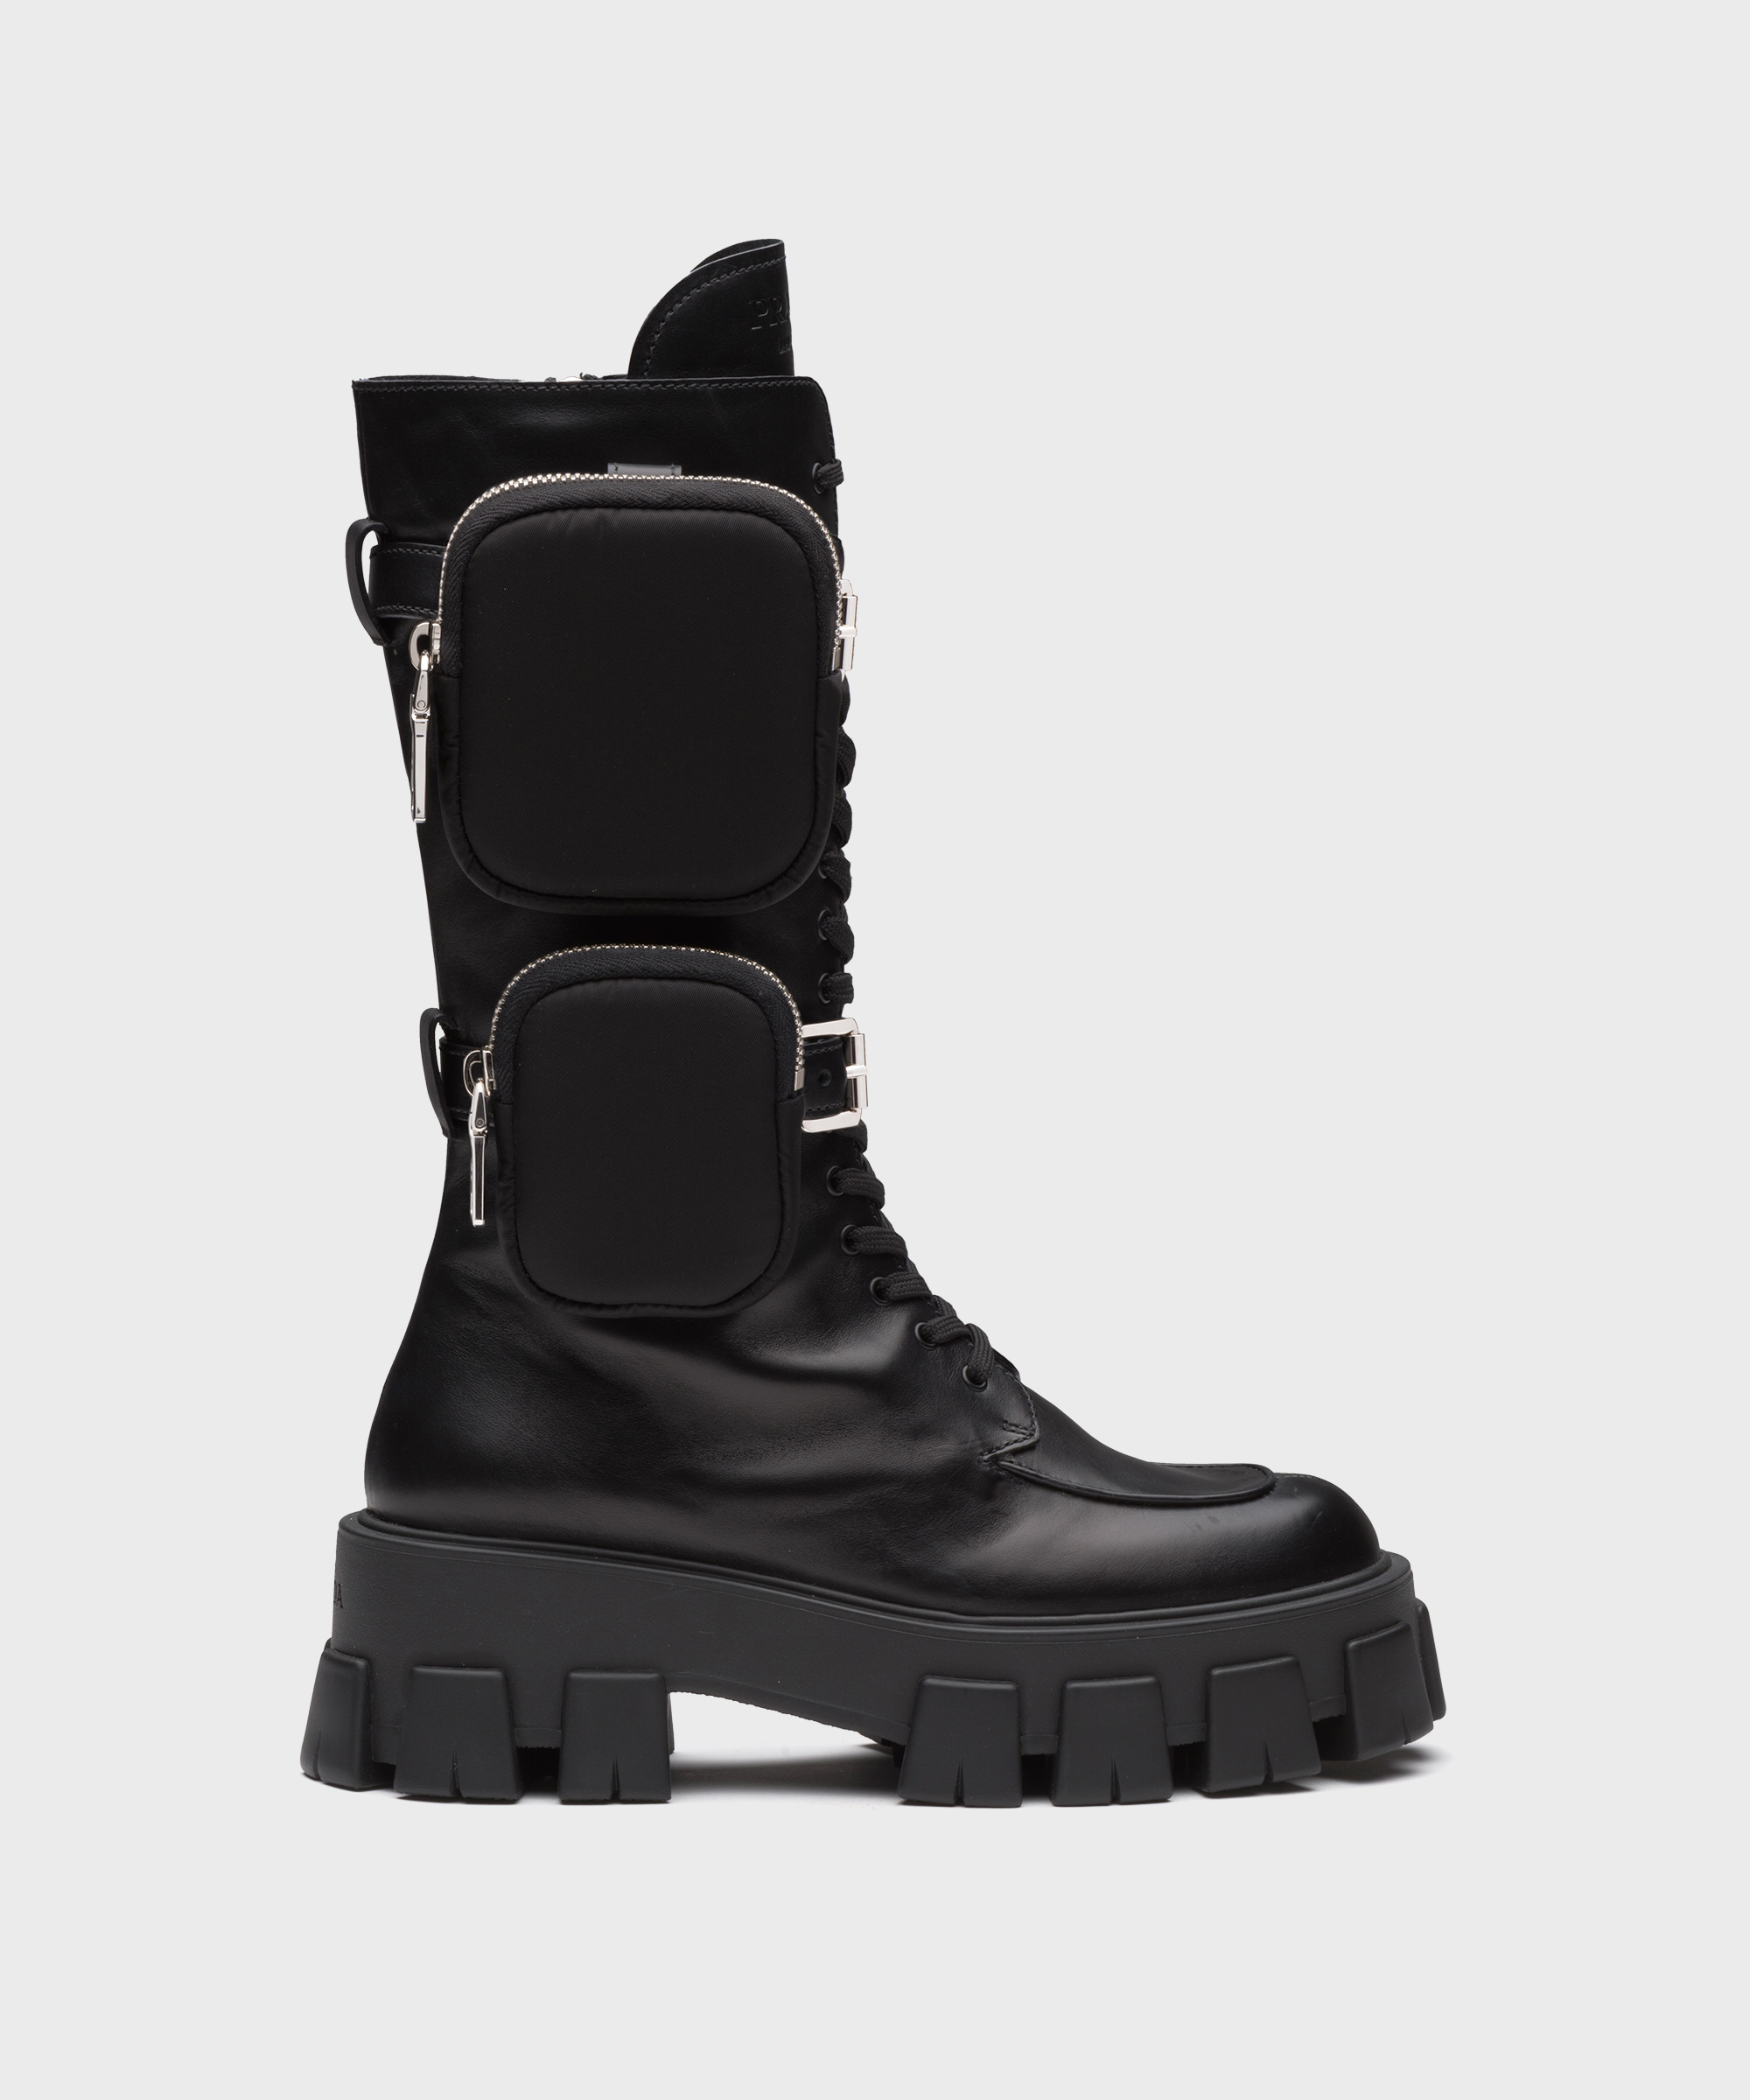 prada boots 2019